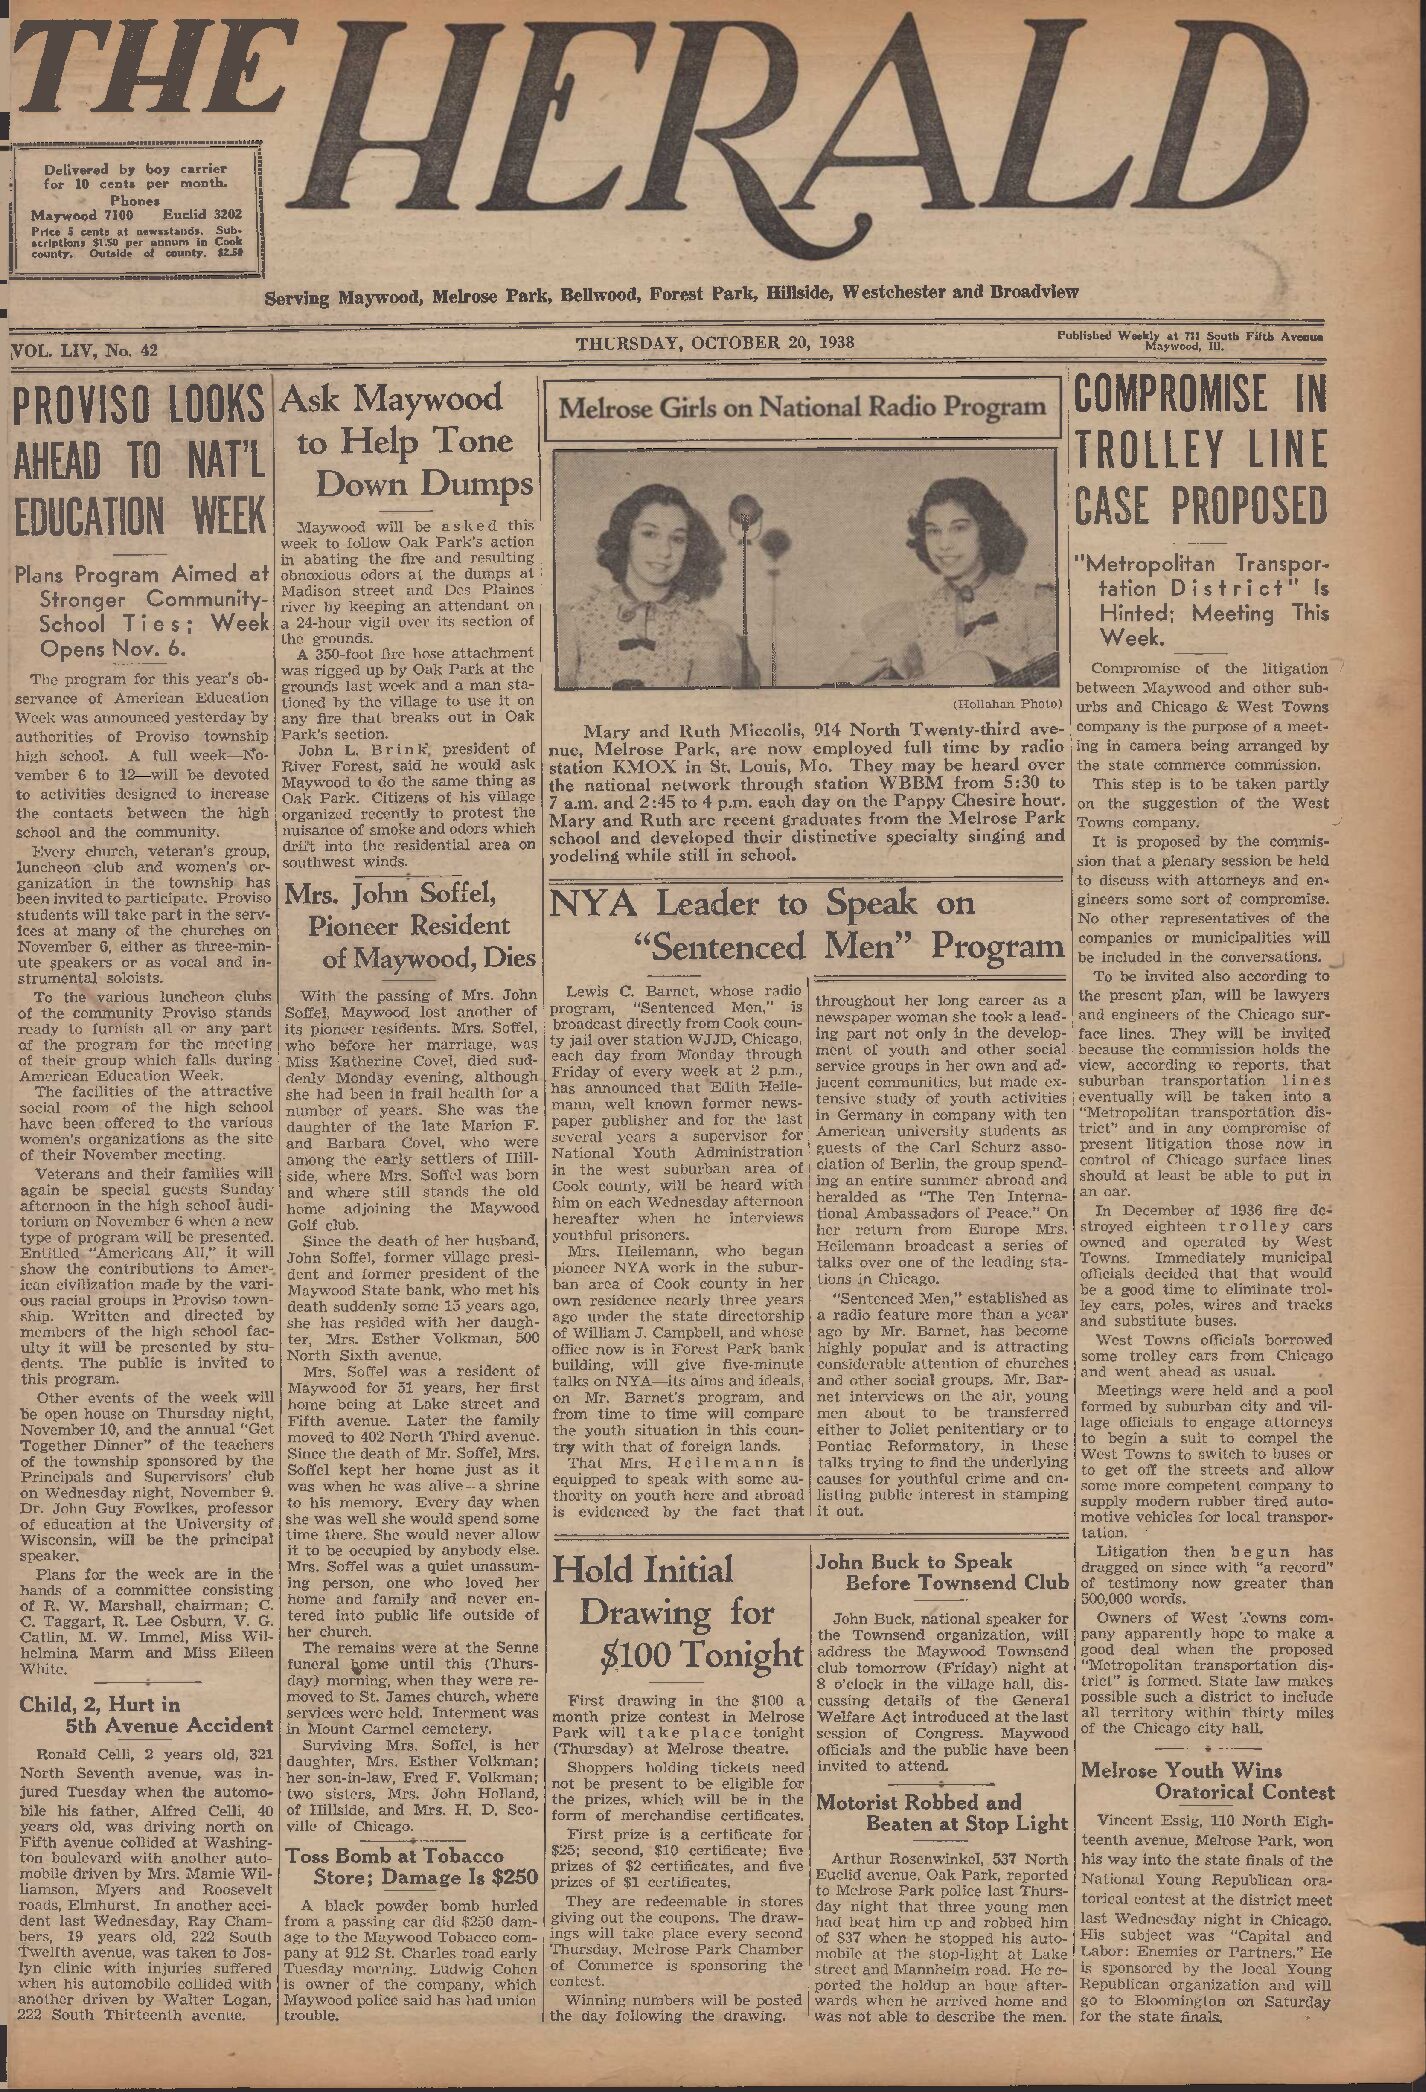 The Herald – 19381020